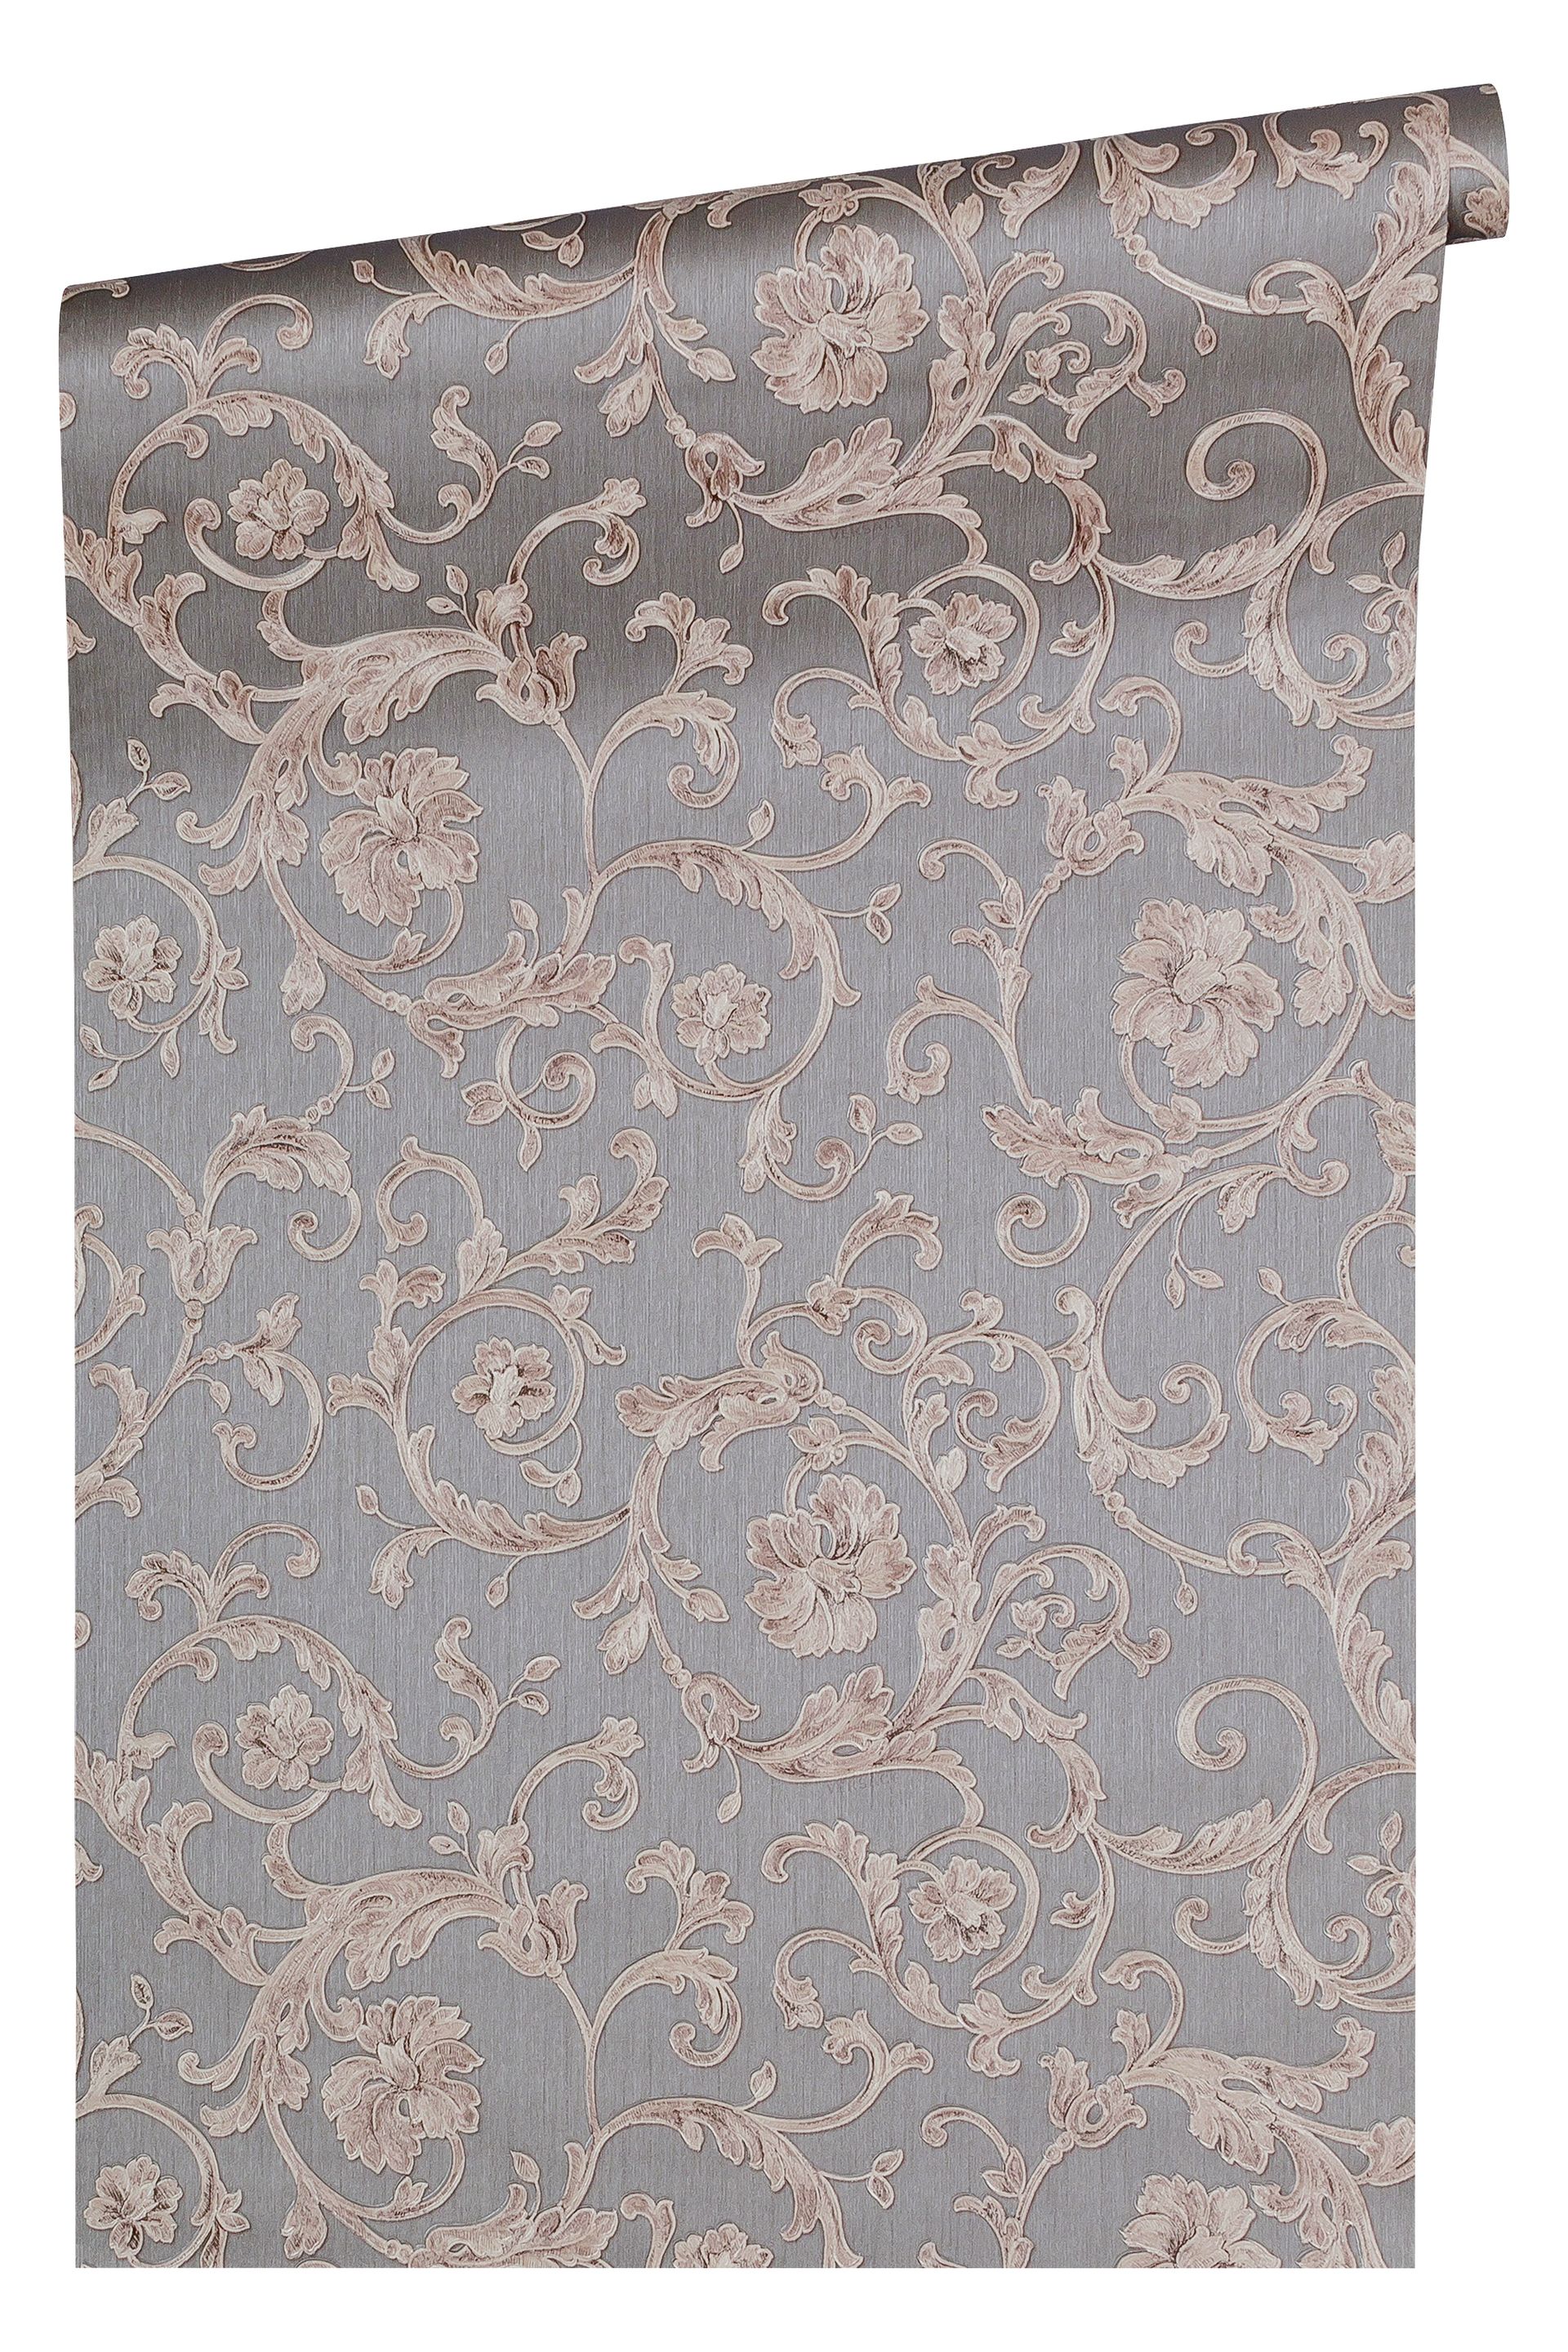 Versace wallpaper Versace 3, Design Tapete, bronze, grau 343265